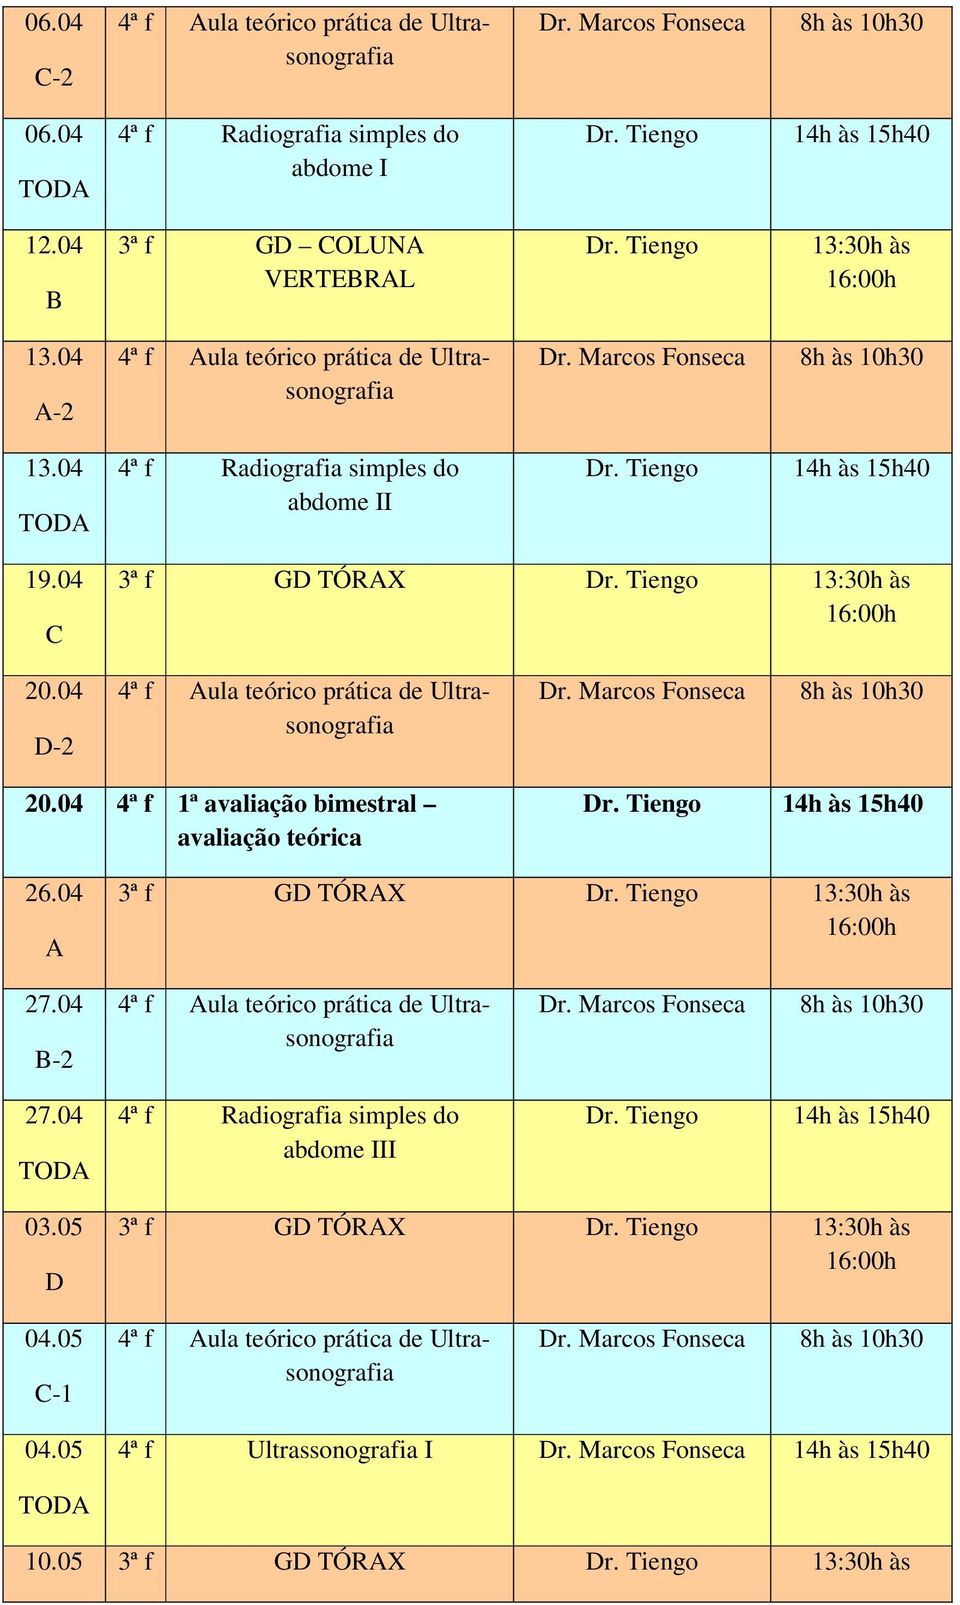 04 D-2 4ª f Aula teórico prática de Ultrasonografia 8h às 30 20.04 4ª f 1ª avaliação bimestral avaliação teórica Dr. Tiengo 14h às 15h40 26.04 A 3ª f GD TÓRAX Dr. Tiengo 13:30h às 16:00h 27.